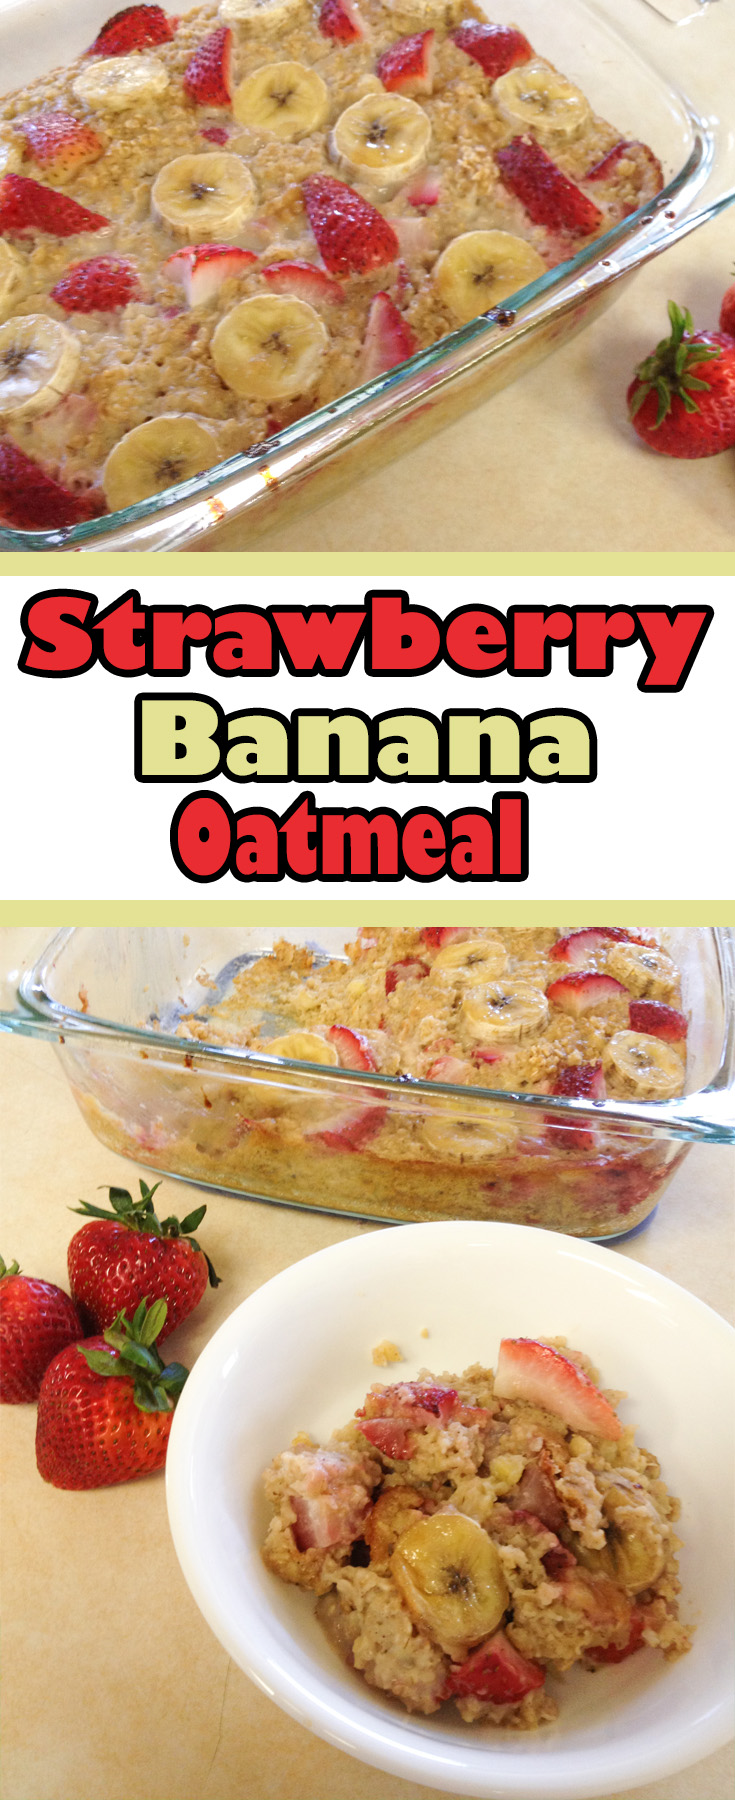 Strawberry Banana Oatmeal